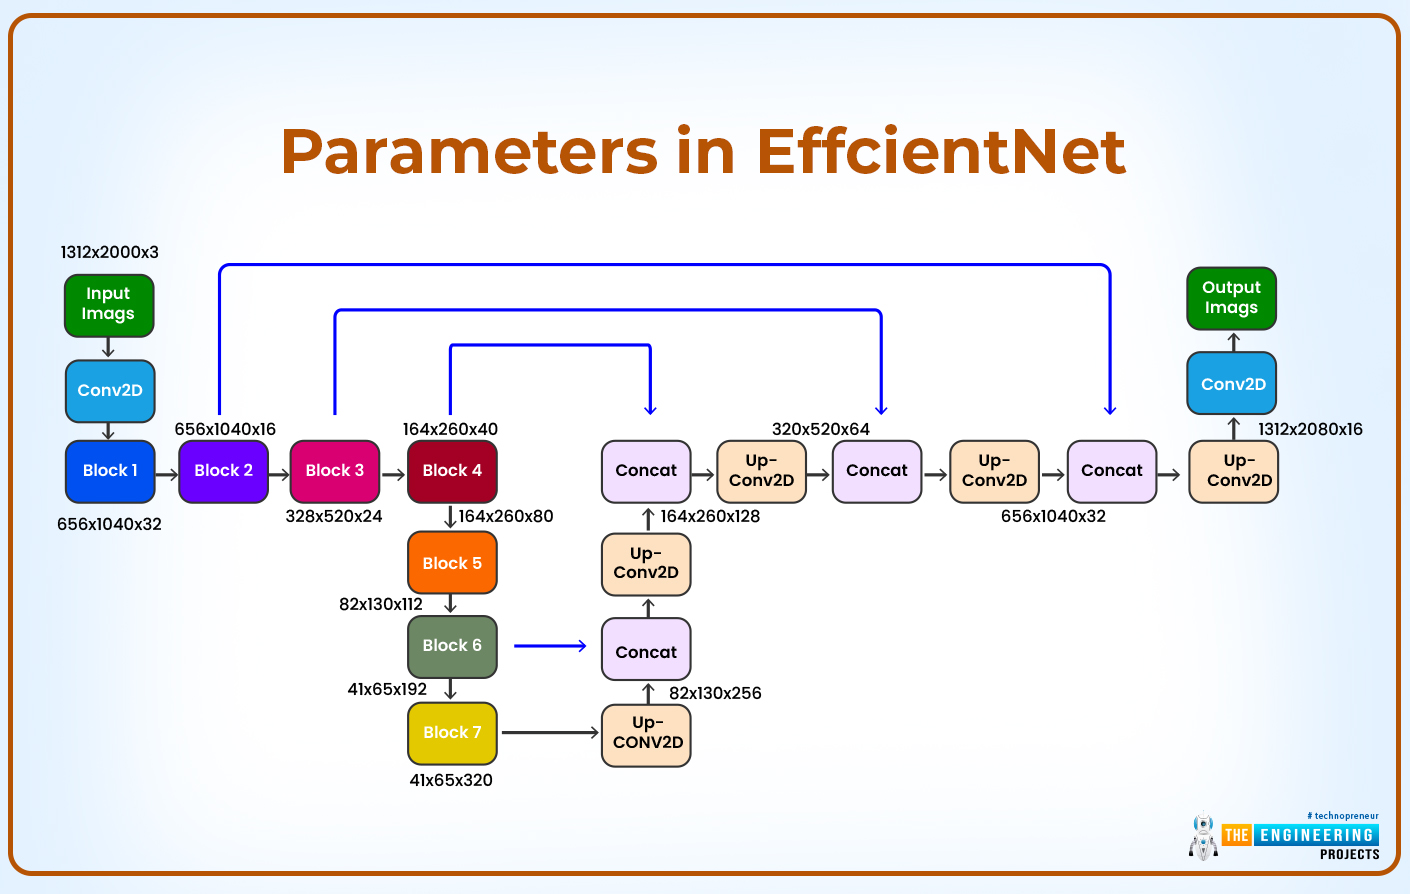 EfficientNet Neural Network, EfficientNet Neural Network working, EfficientNet working, EfficientNet features, EfficientNet deep learning, EfficientNet features